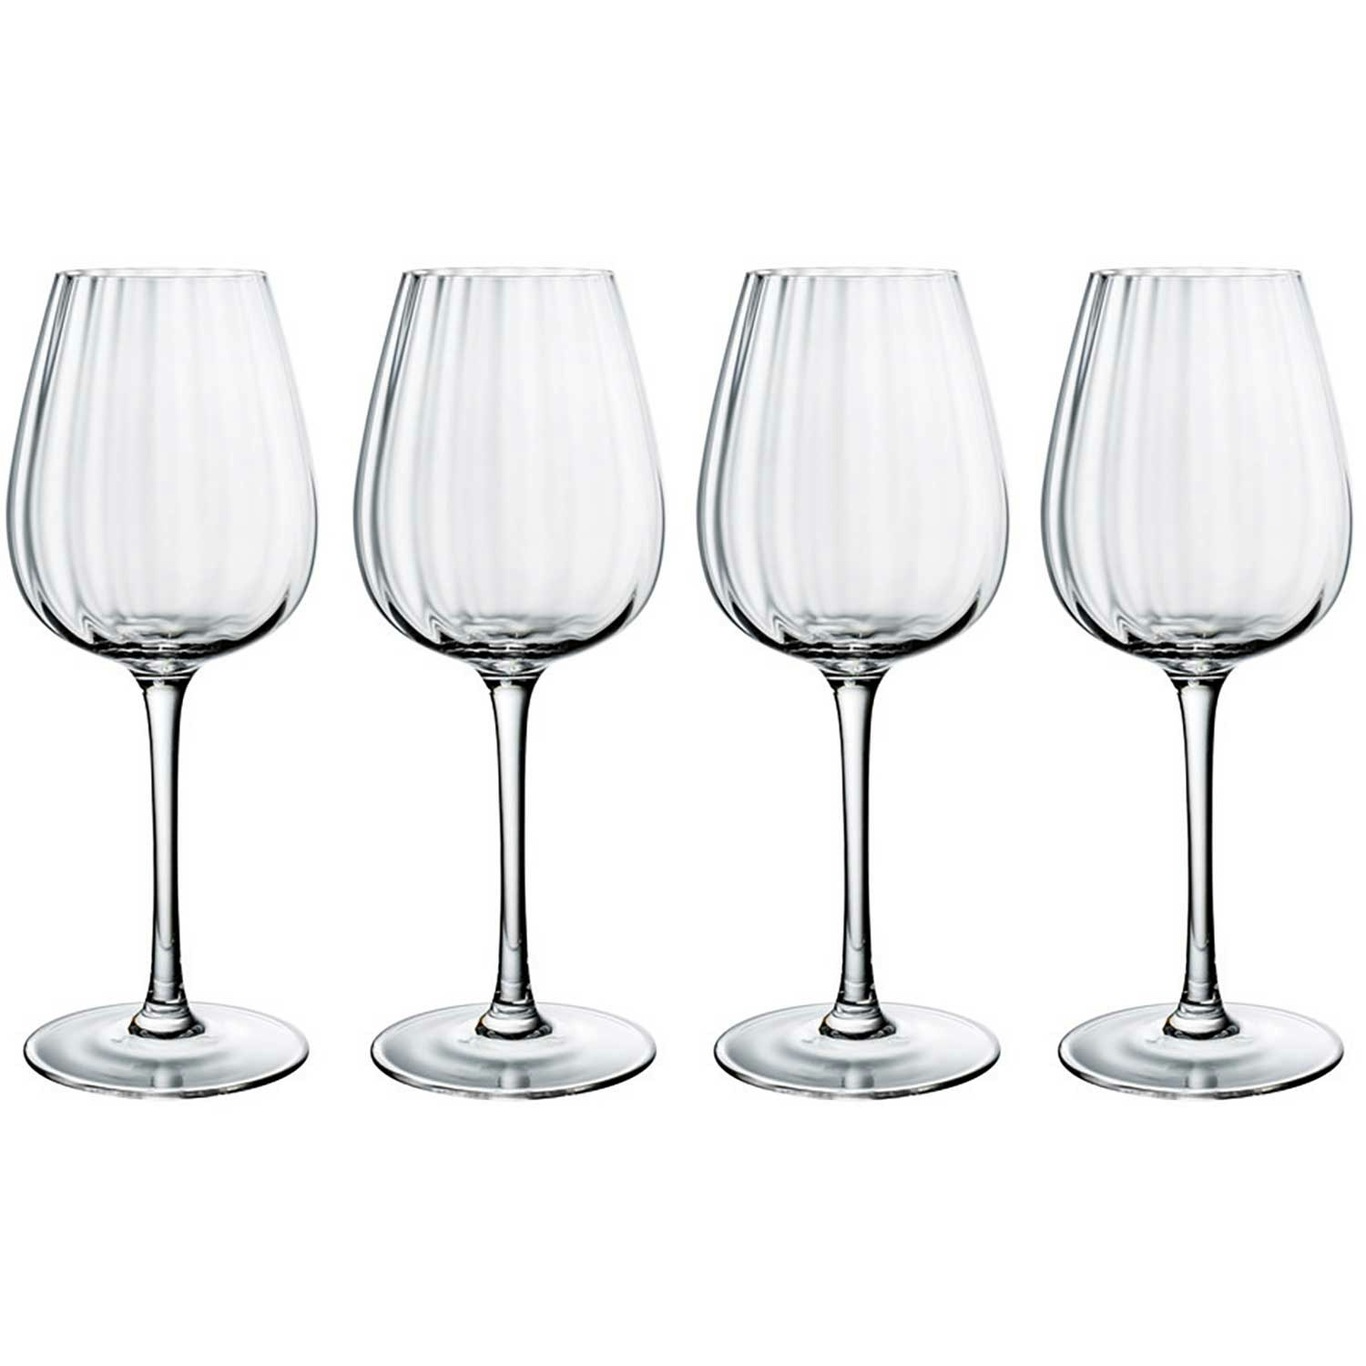 https://royaldesign.com/image/11/villeroy-boch-rose-garden-white-wine-goblet-set-4pc-0?w=800&quality=80